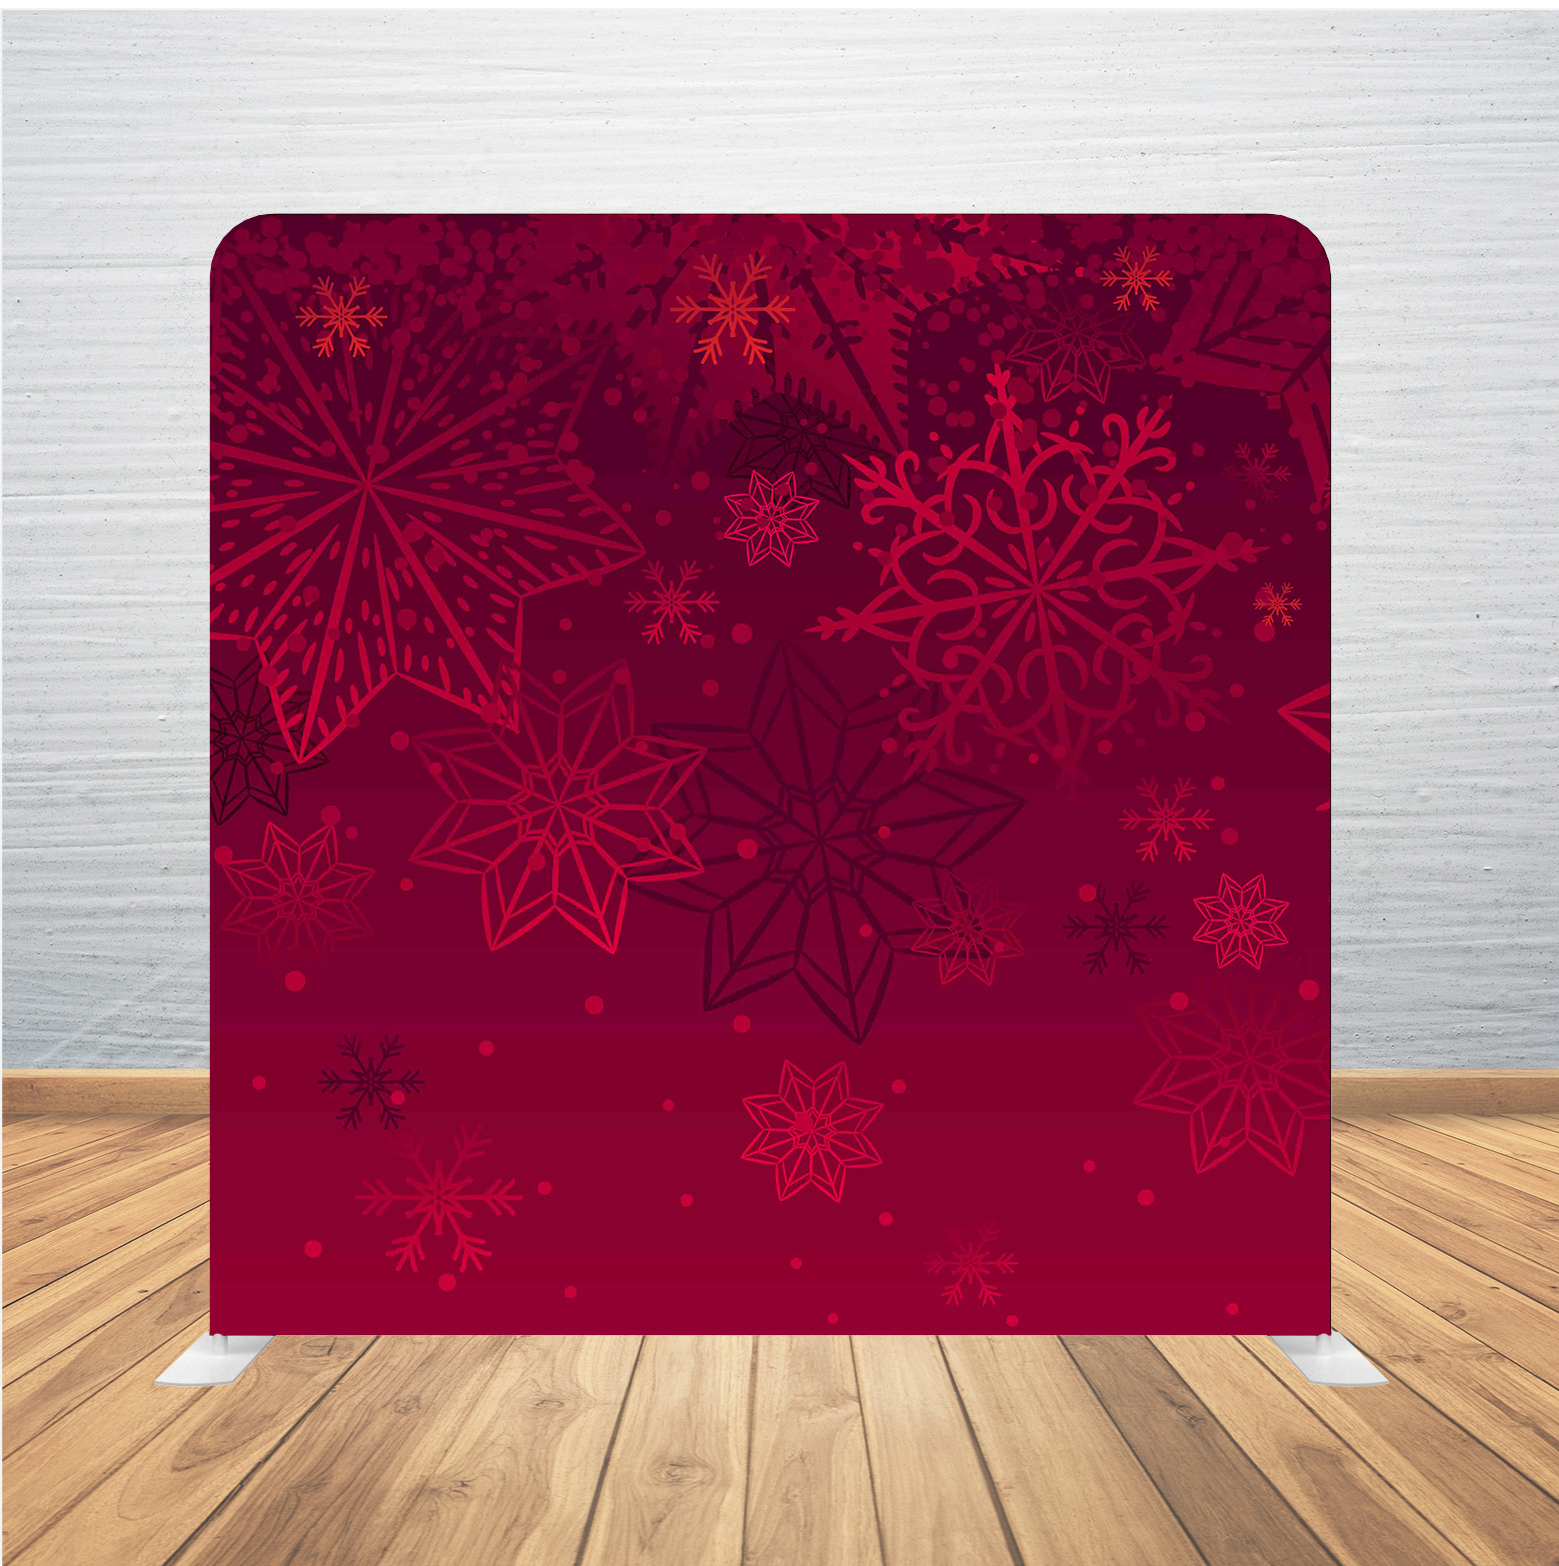 8X8 Pillowcase Tension Backdrop- Red Snowflakes